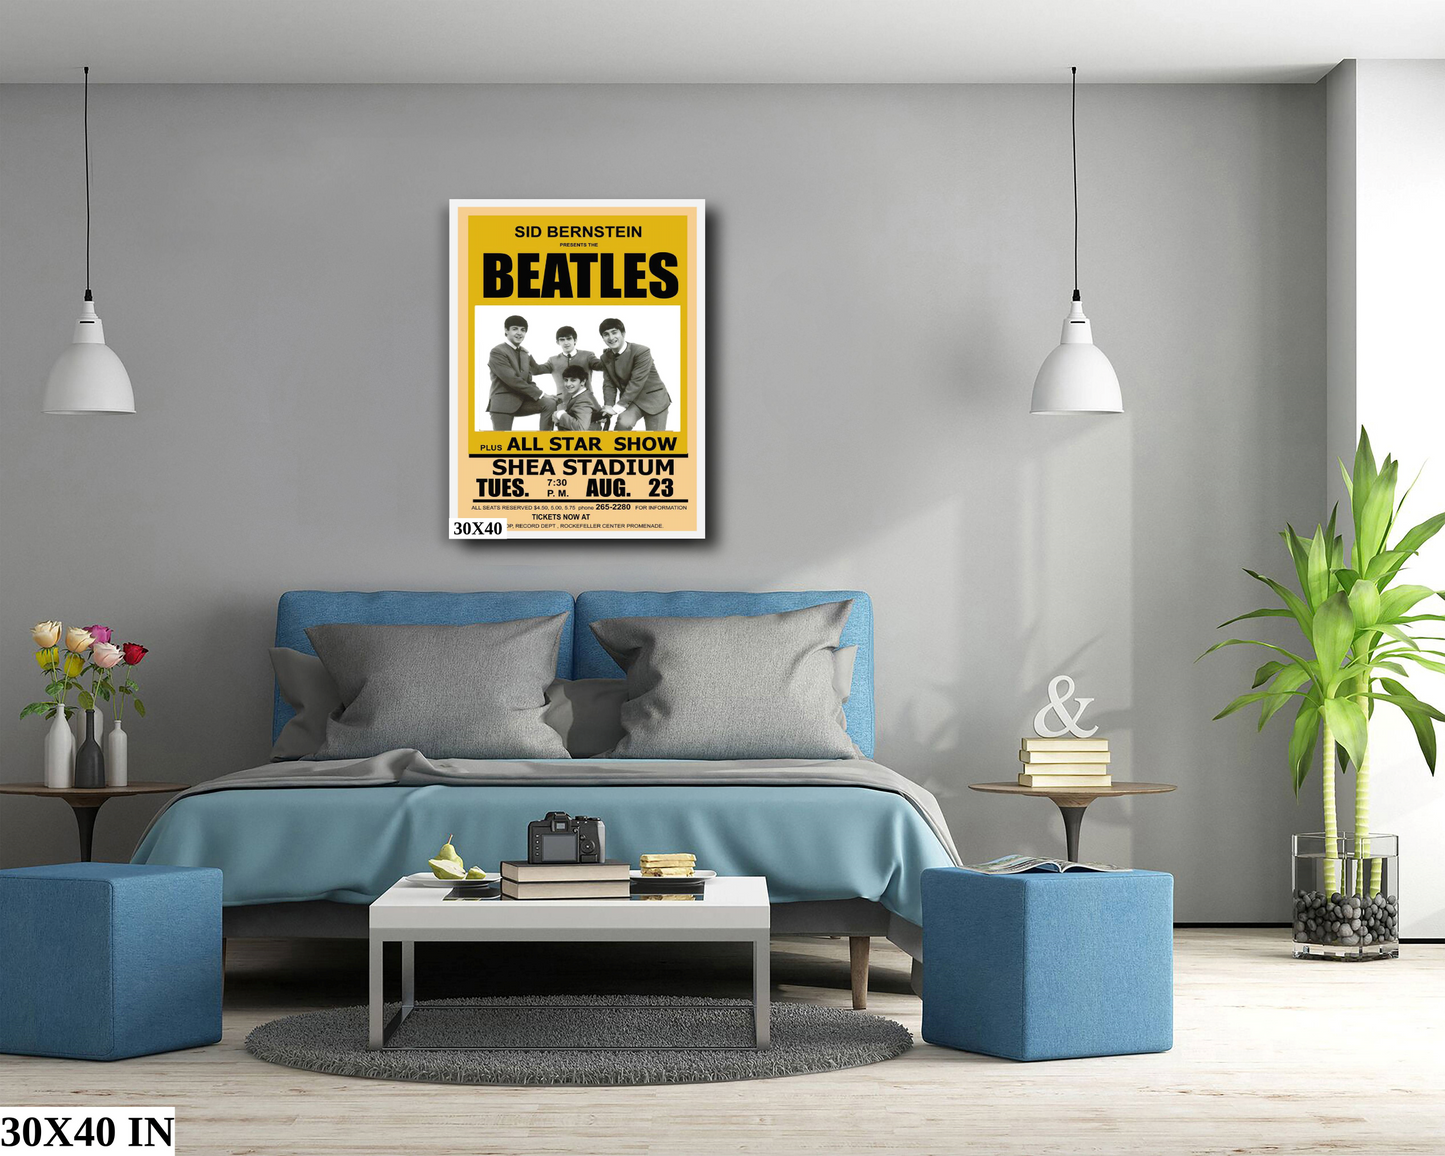 The Beatles at Shea Stadium 2 concert poster